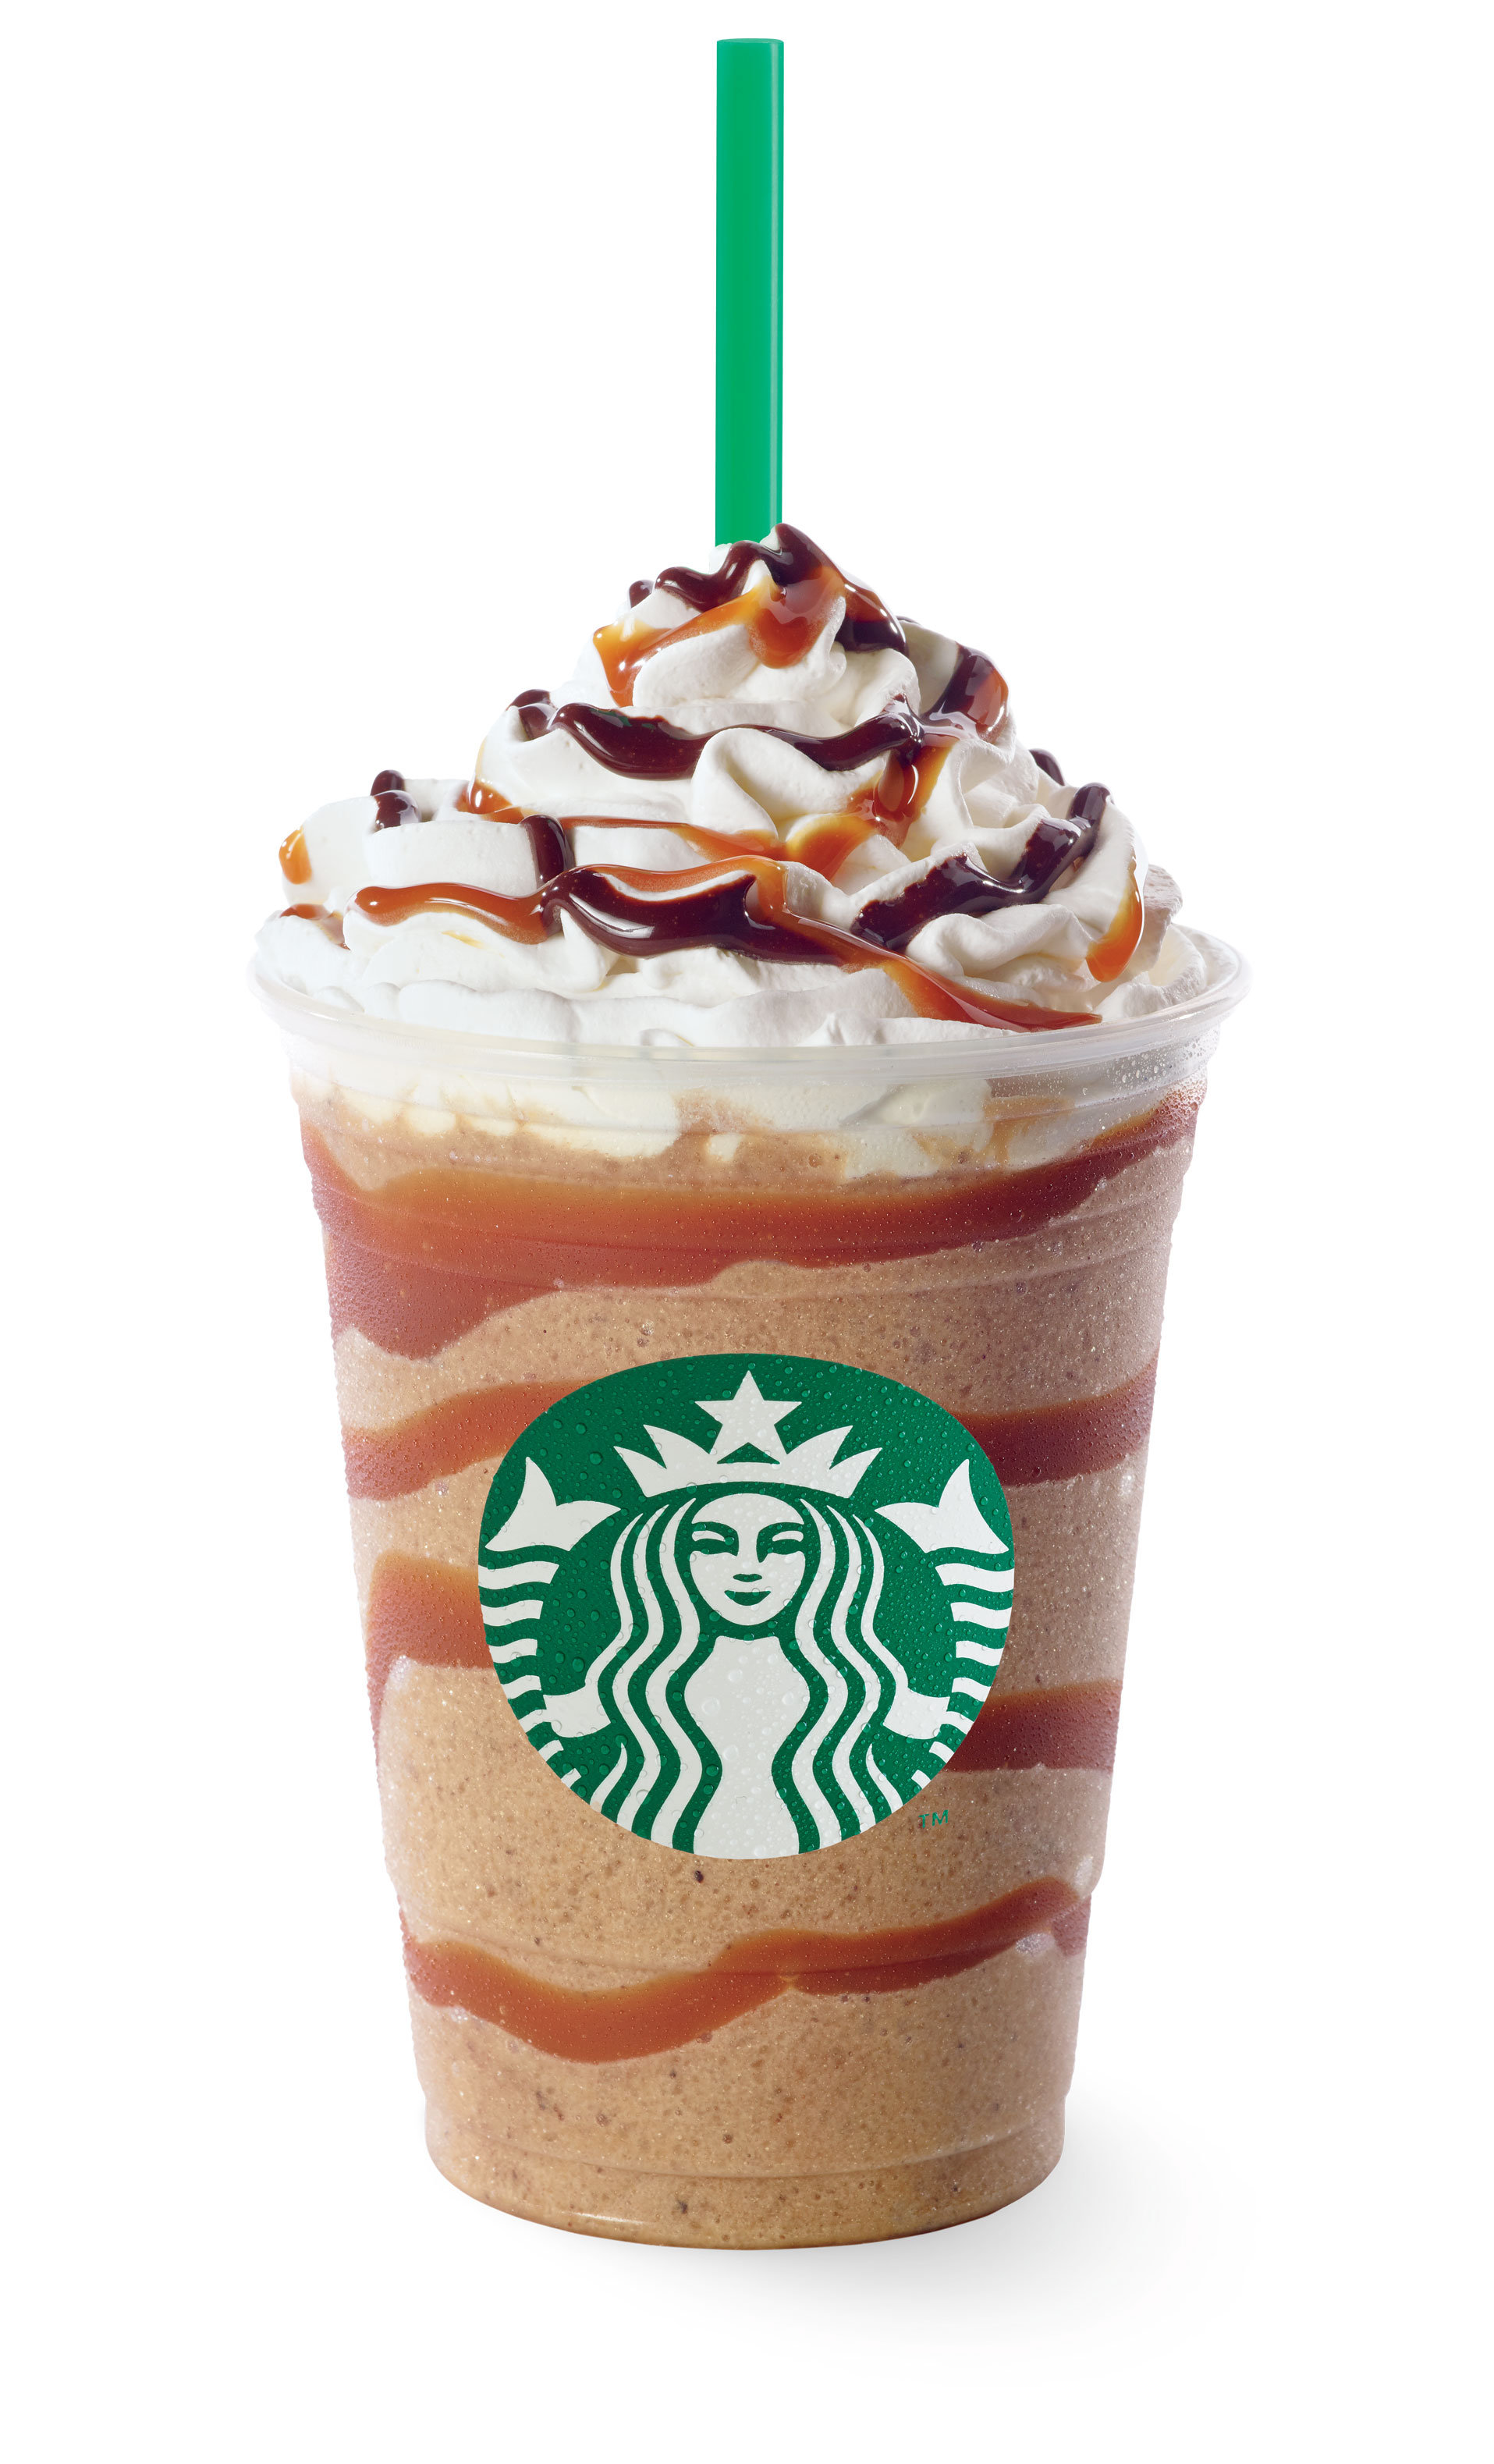 Starbucks ta introdusí tres sabor nobo  den promoshon ‘Summer 1’